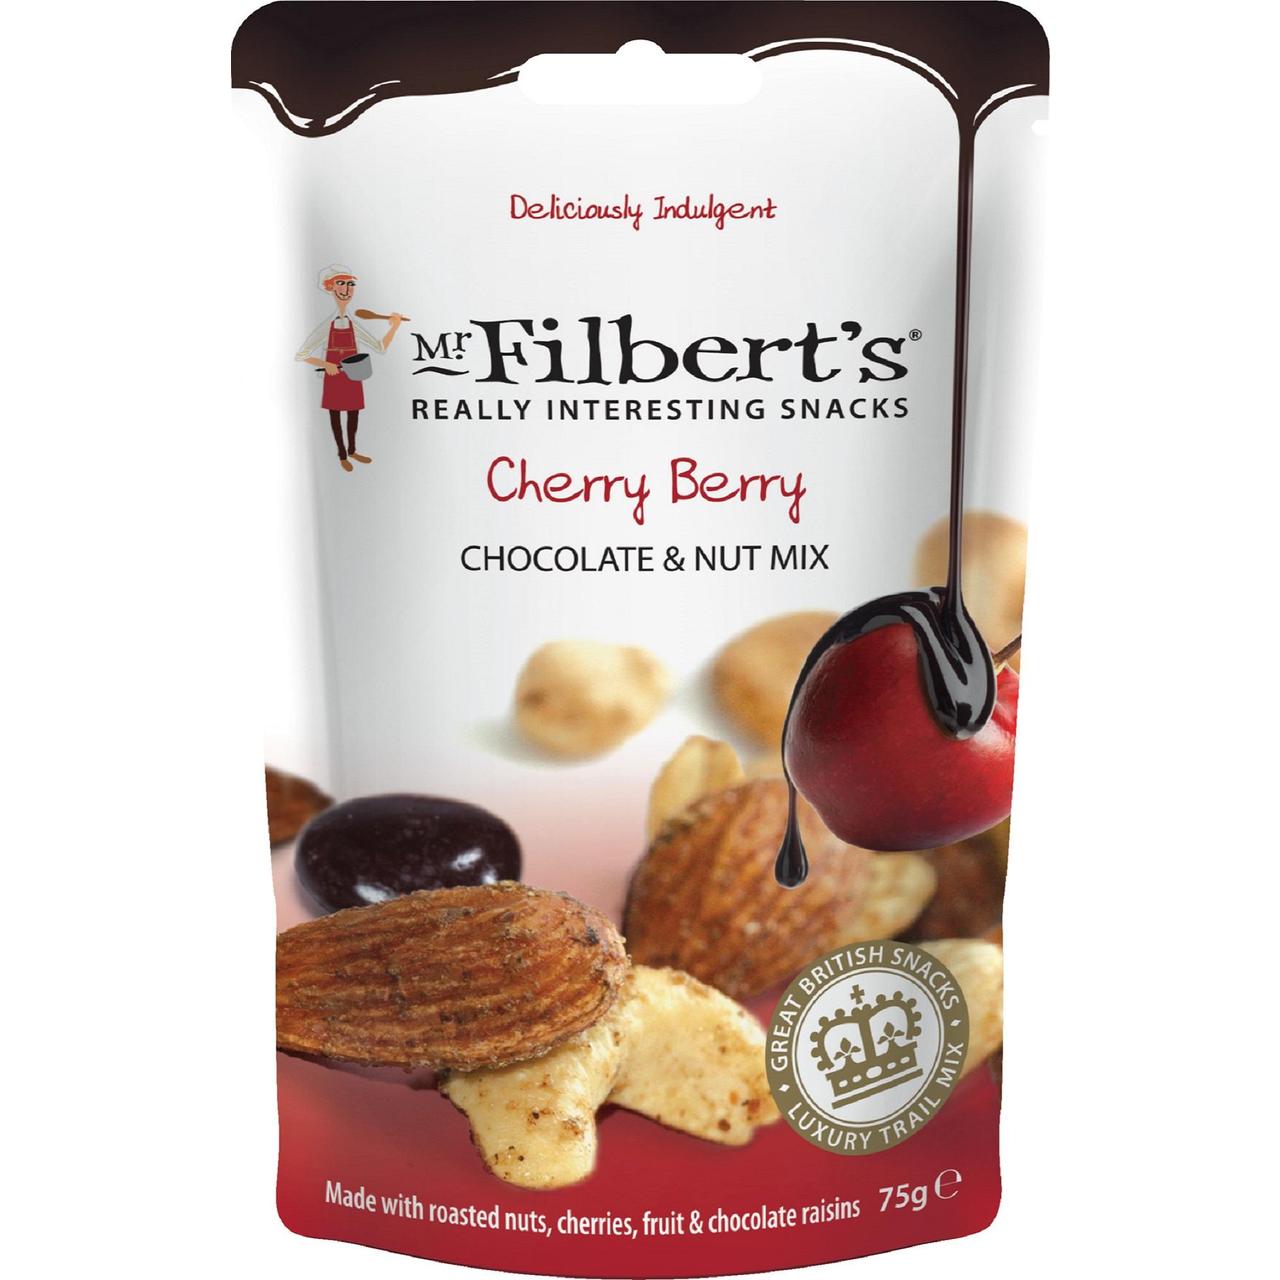 Mr Filbert's Cherry Berry Chocolate & Nut Mix